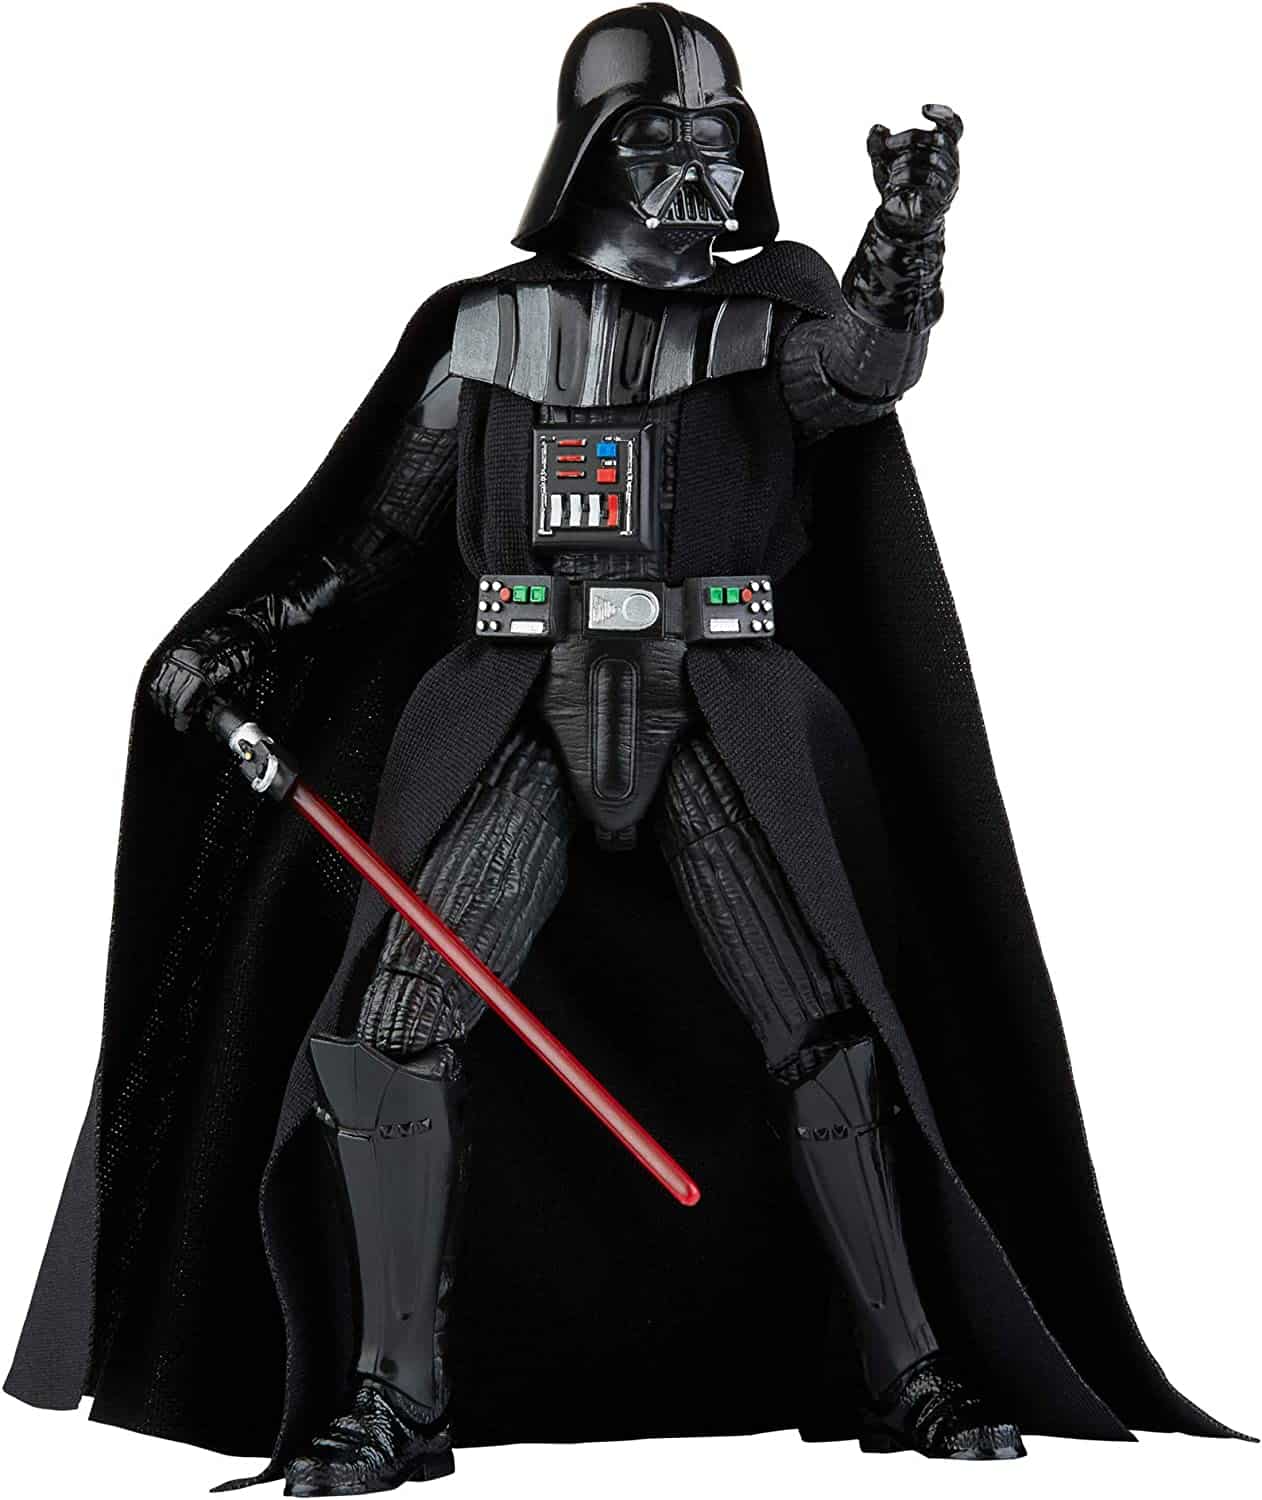 Best Star Wars stop motion action figure- Black Series Darth Vader